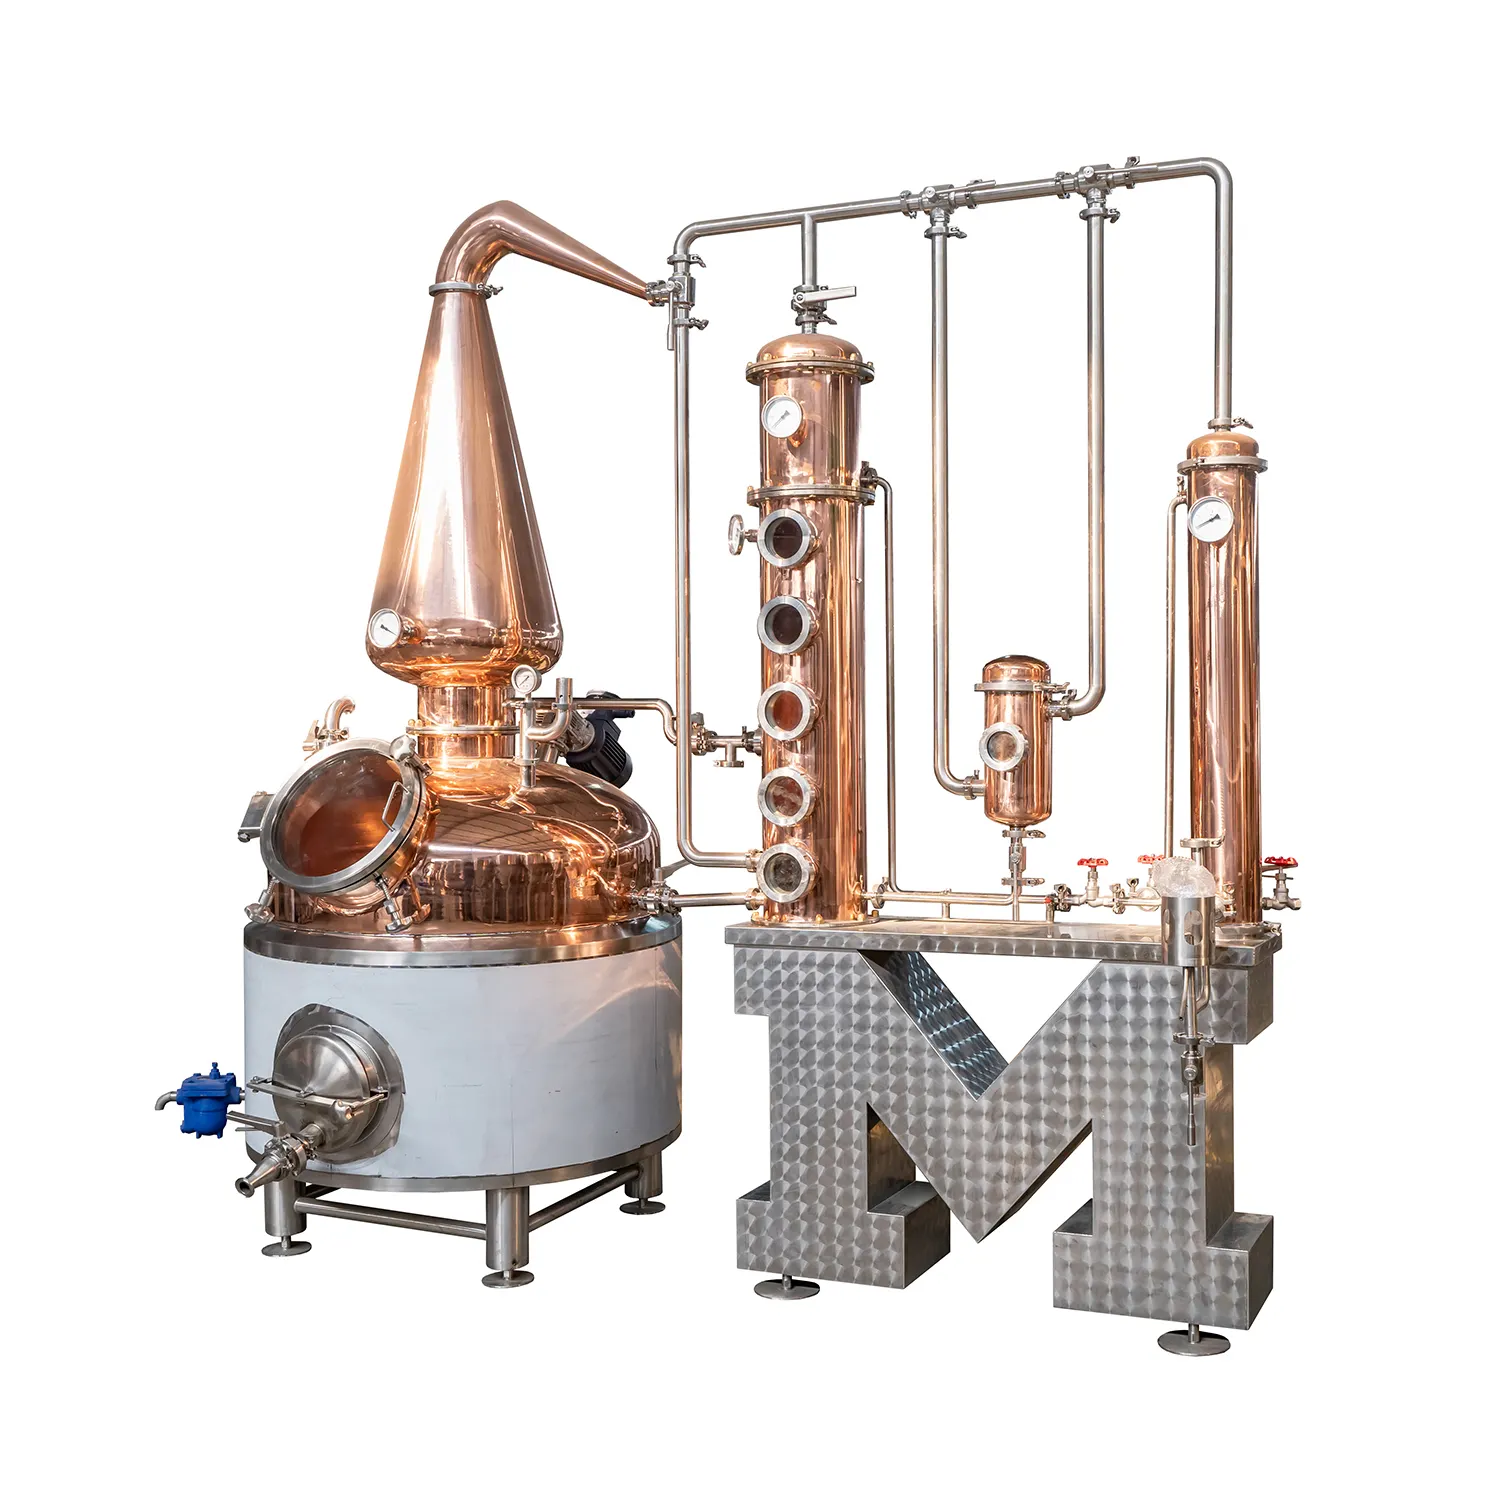 METOプロフェッショナル銅ウイスキー蒸留所アレンビック蒸留ウイスキー蒸留装置500Lジンウイスキー蒸留所